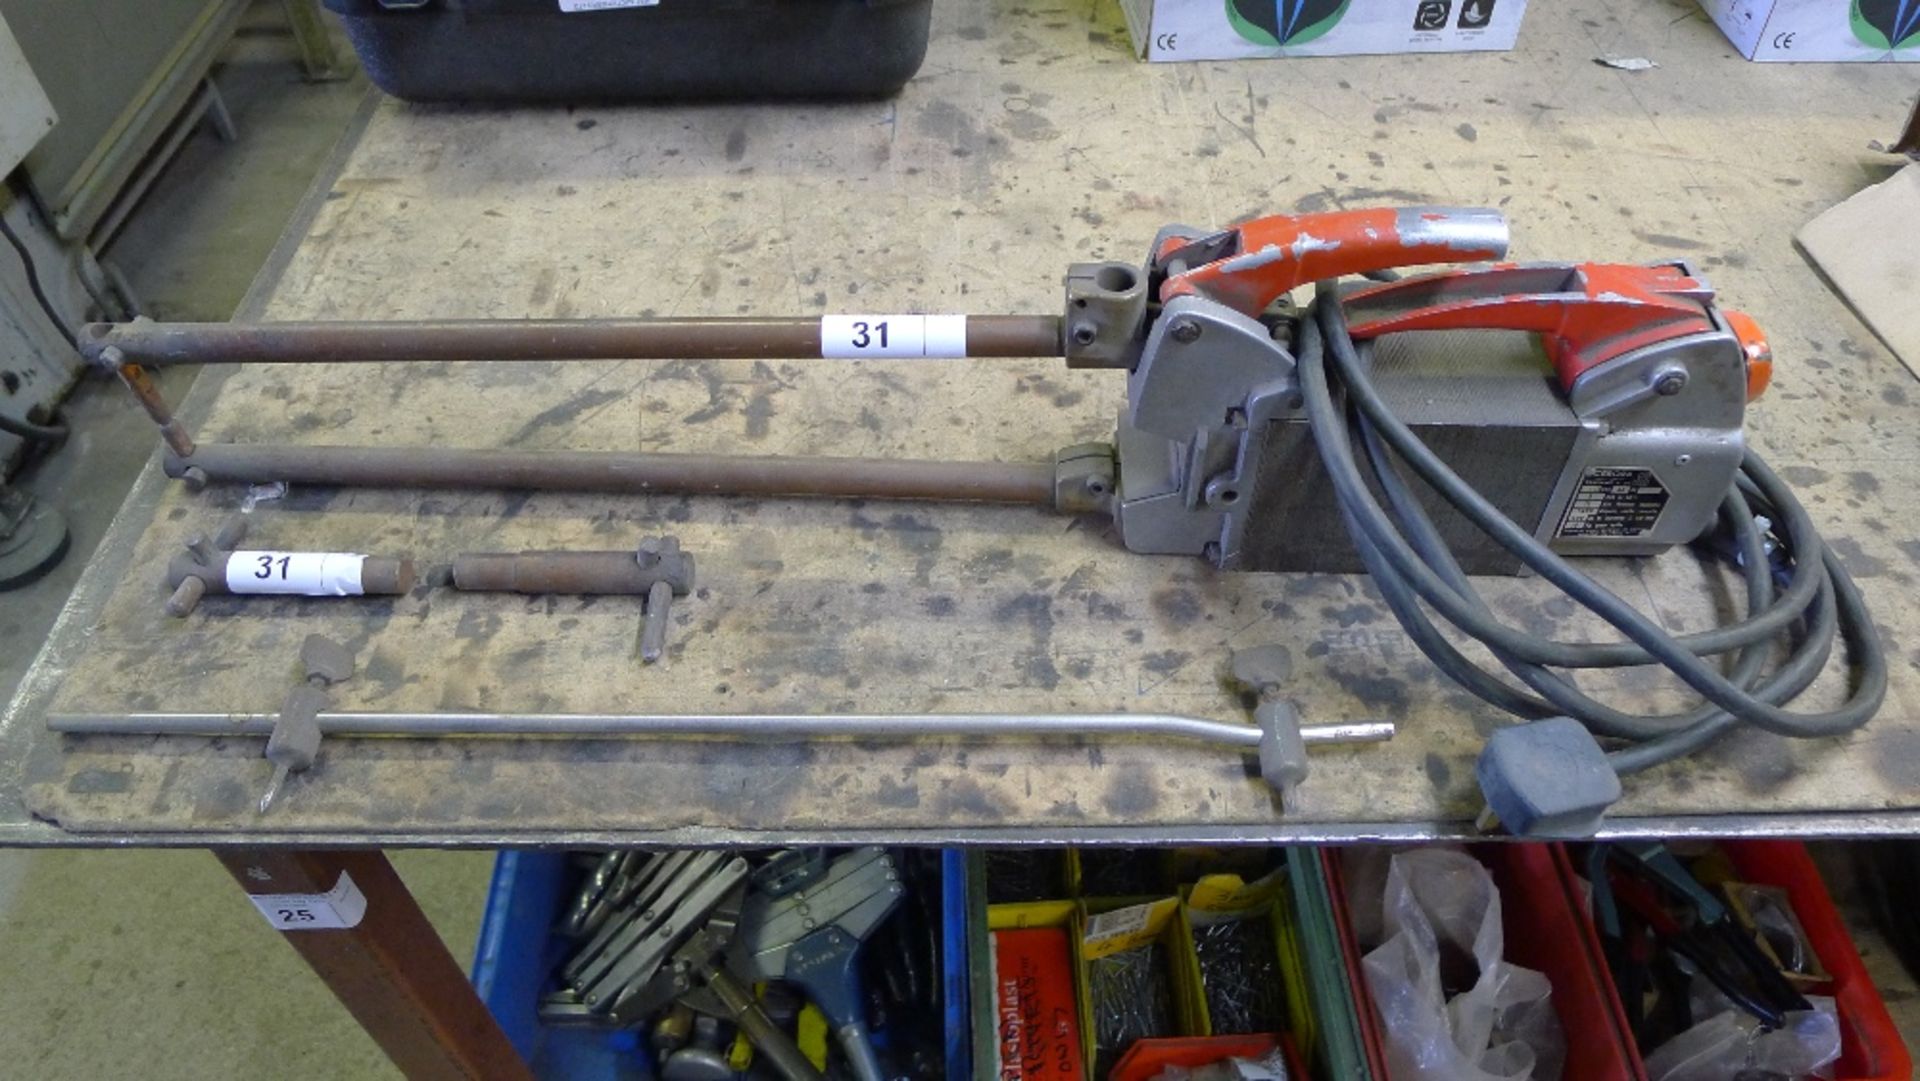 1 Cebora spot welder type Tecna T31, 240v and 1 marking tool